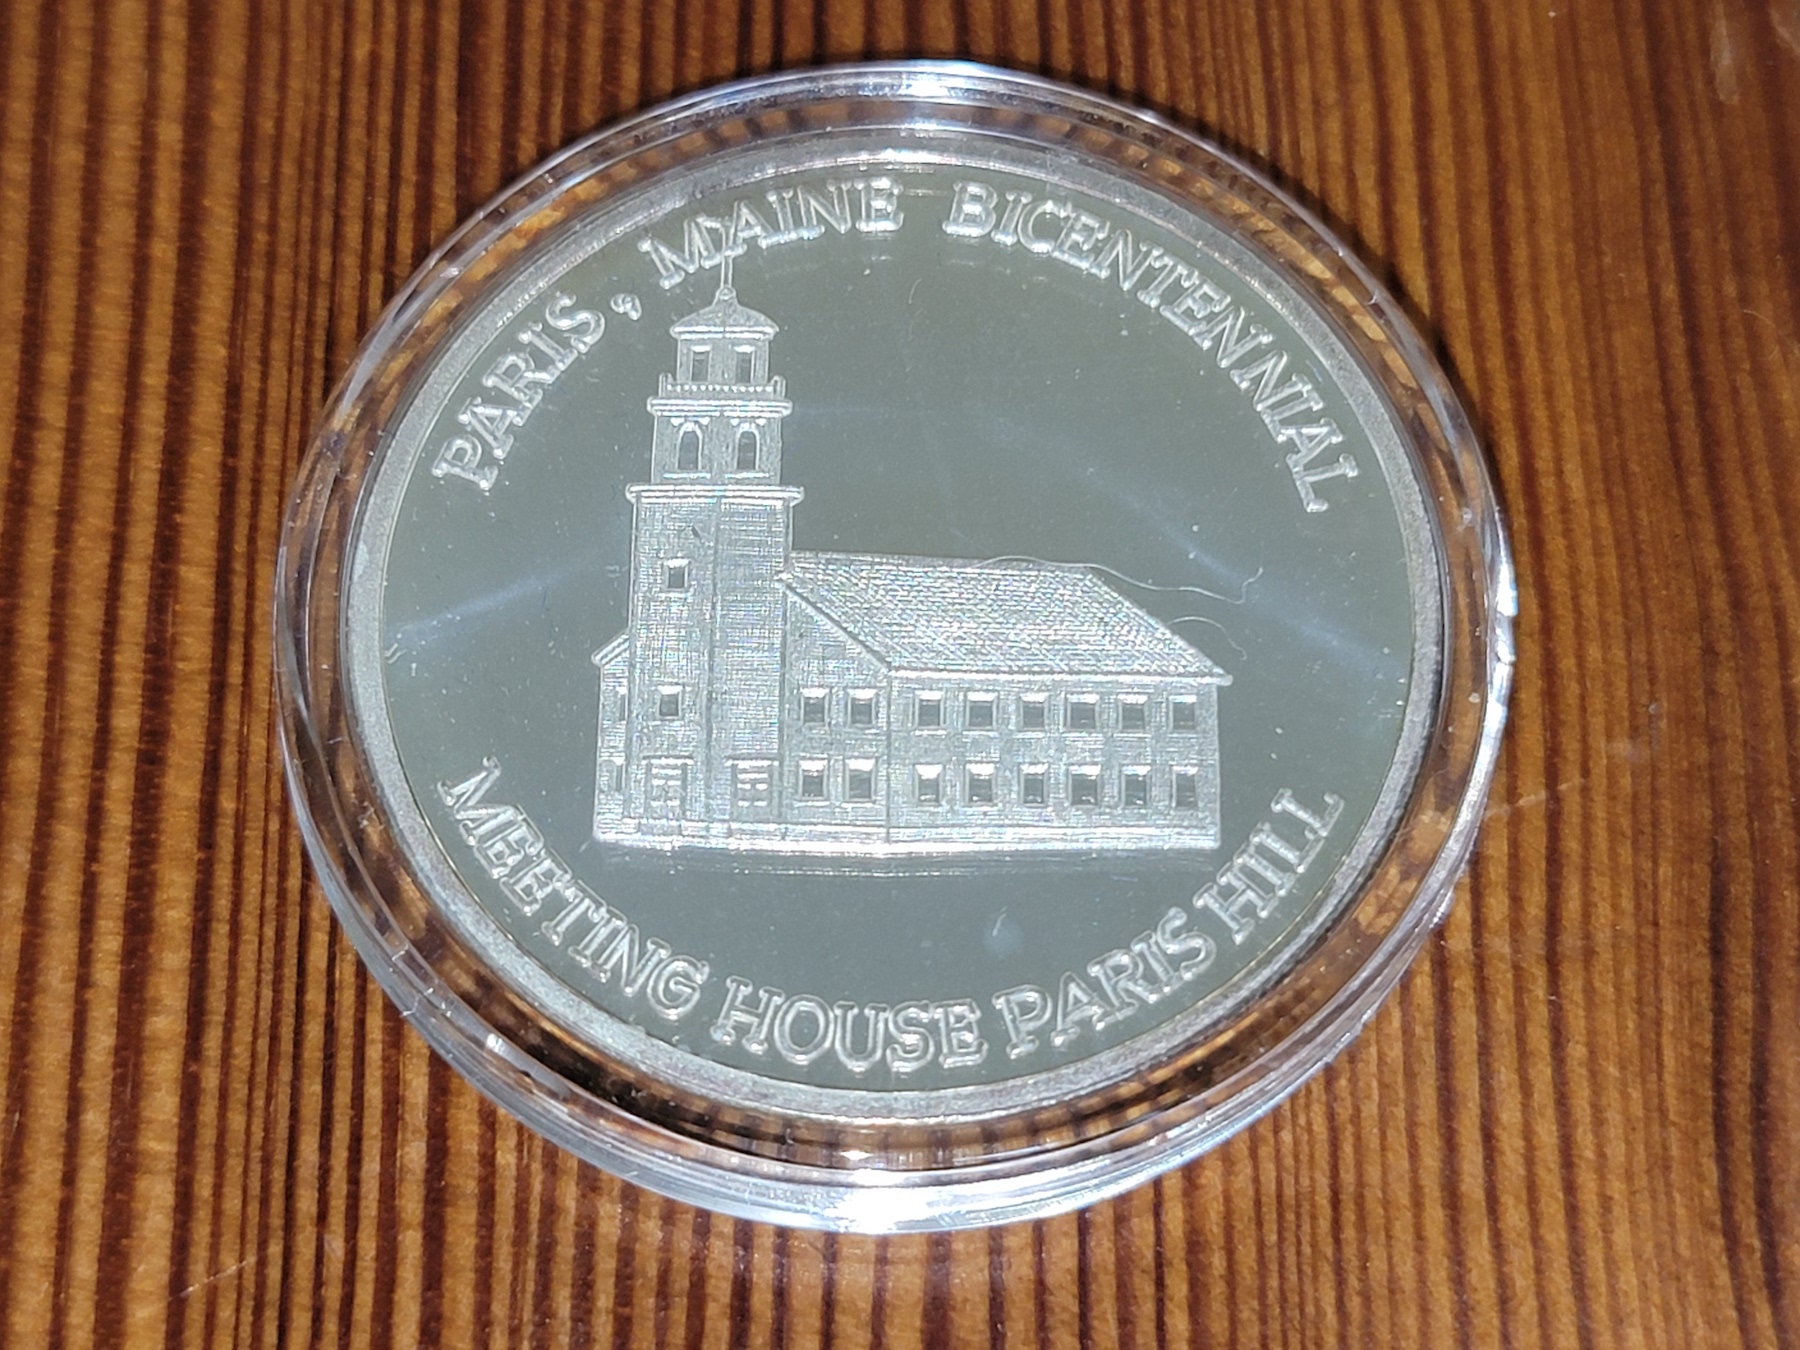 Silver Paris, Maine Bicentennial Commemorative Coins Available!